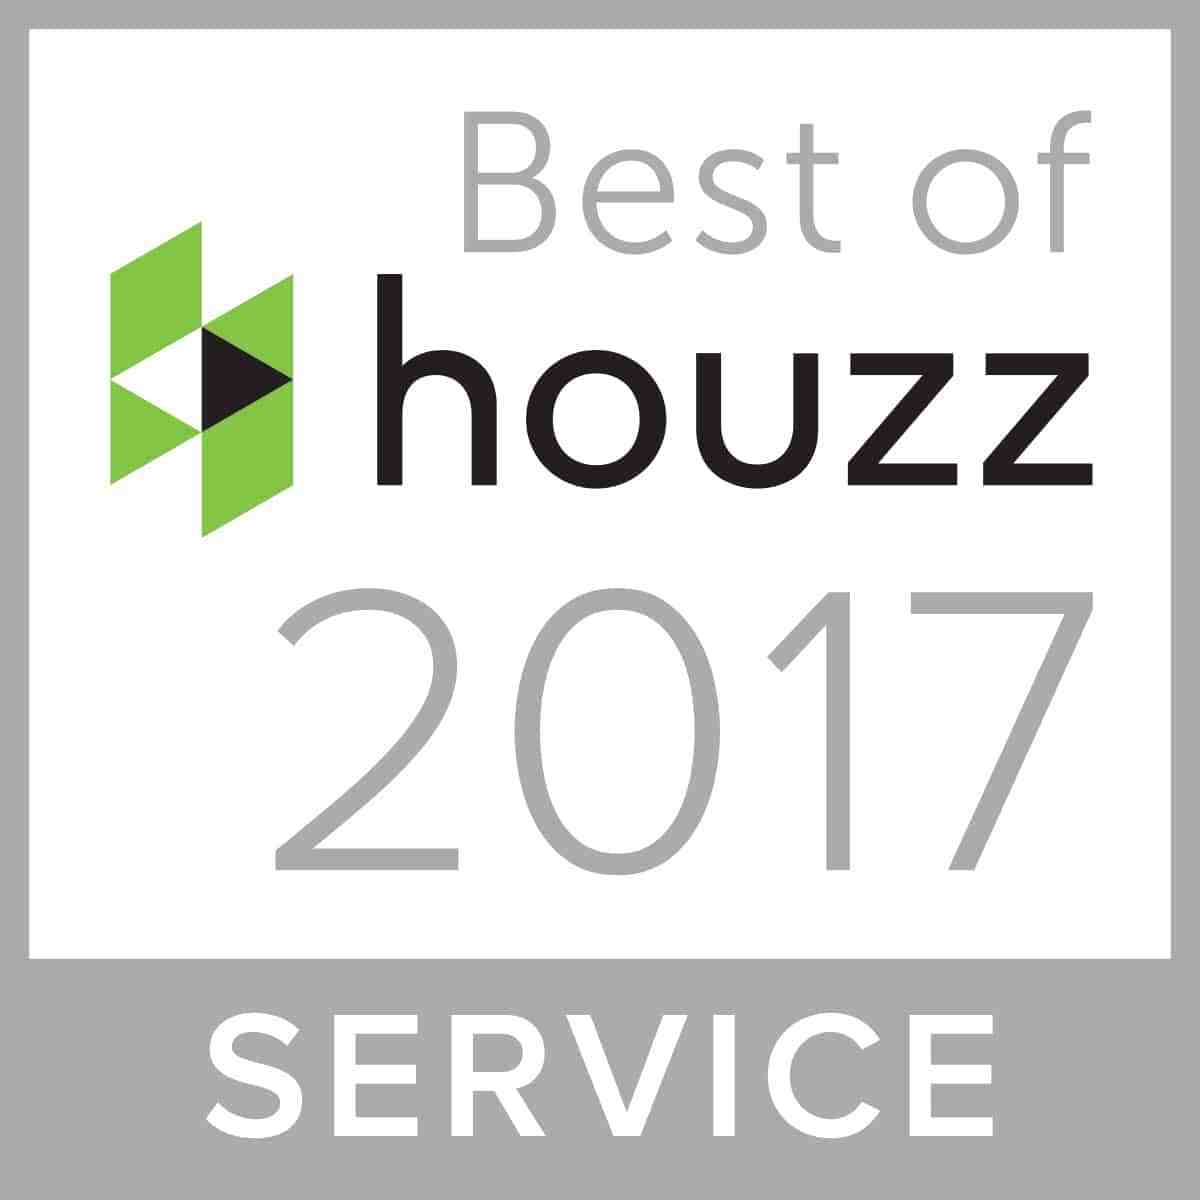 eDEN Wins ‘Best of Houzz’ 2017 Award for Service